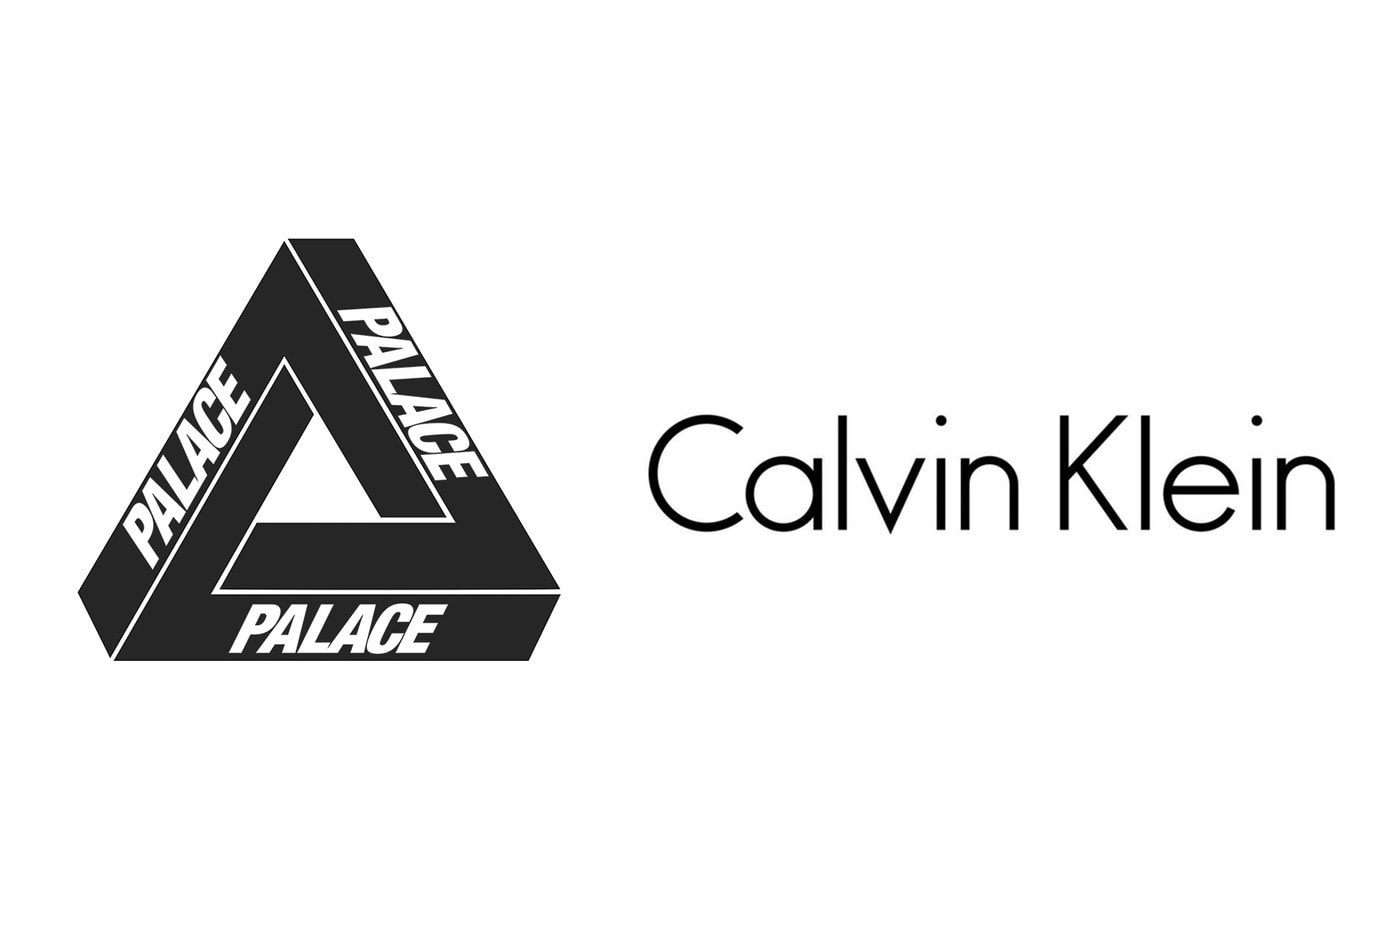 Calvin Klein Palace Skateboards Collaboration Teaser Release Info